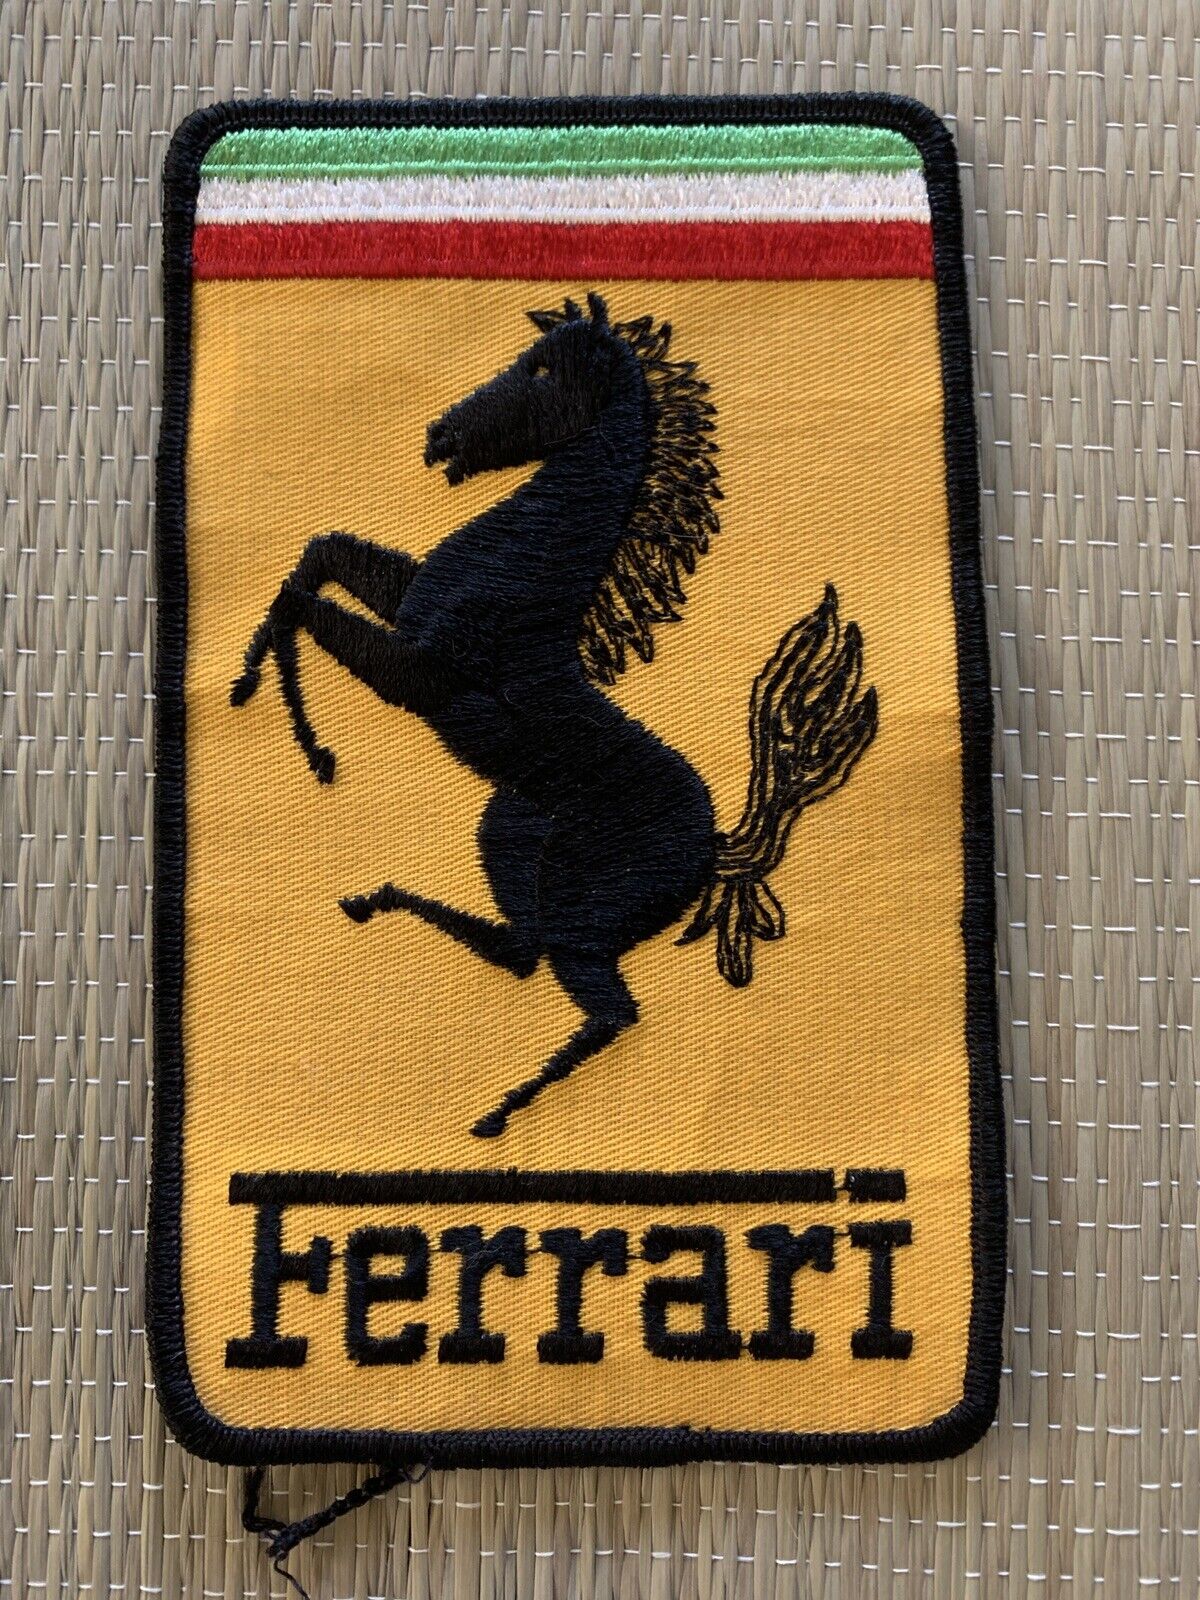 Vintage 80s-90s Era Ferrari Team Patch 6.3/8”x4”